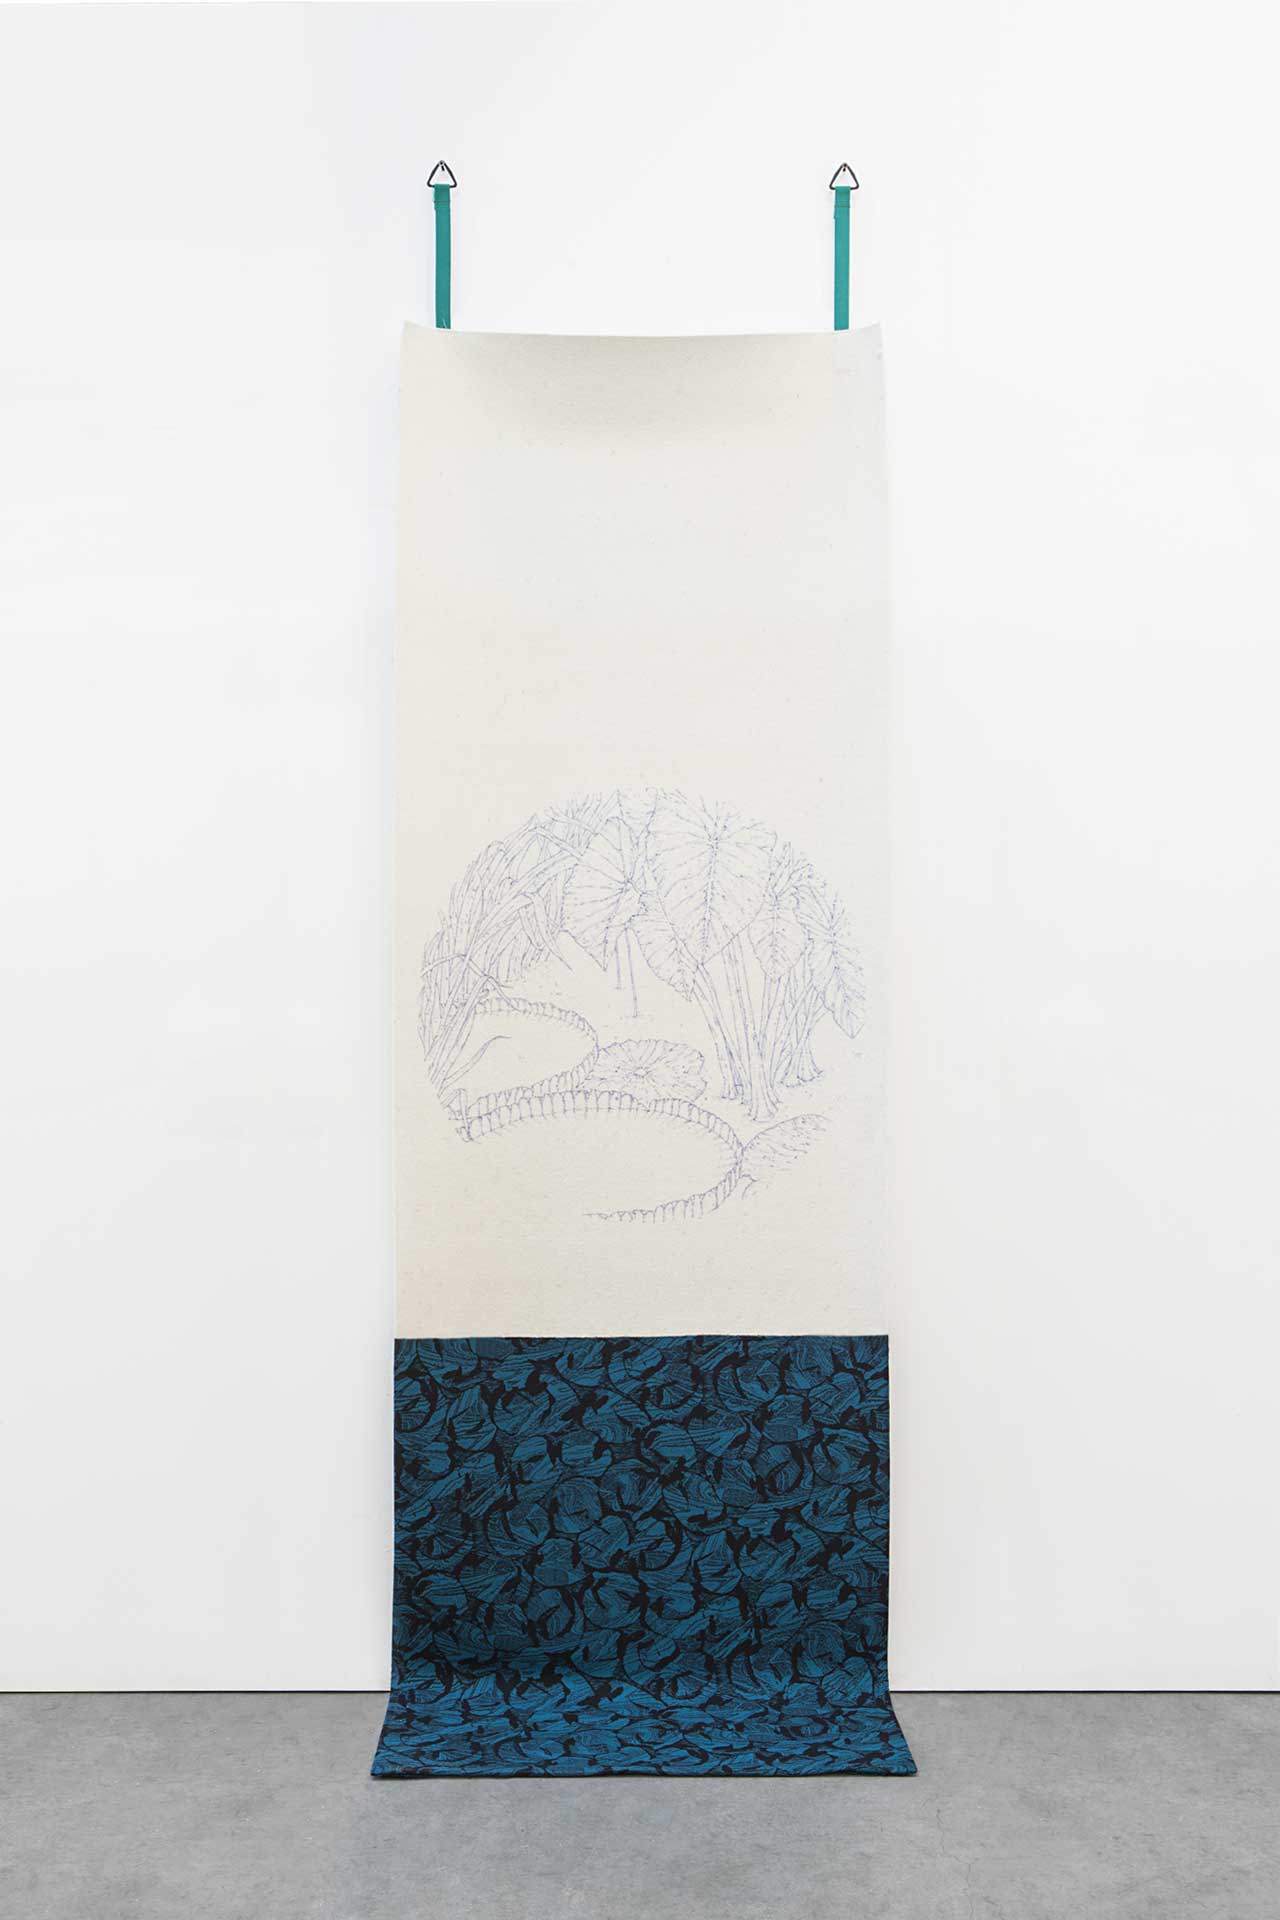 Marco Basta, 'Giardino (Marseille)', 2013, felt-tip pen on felt and fabric, 225 x 81 cm. Photo: Andrea Rossetti. Image courtesy the artist.